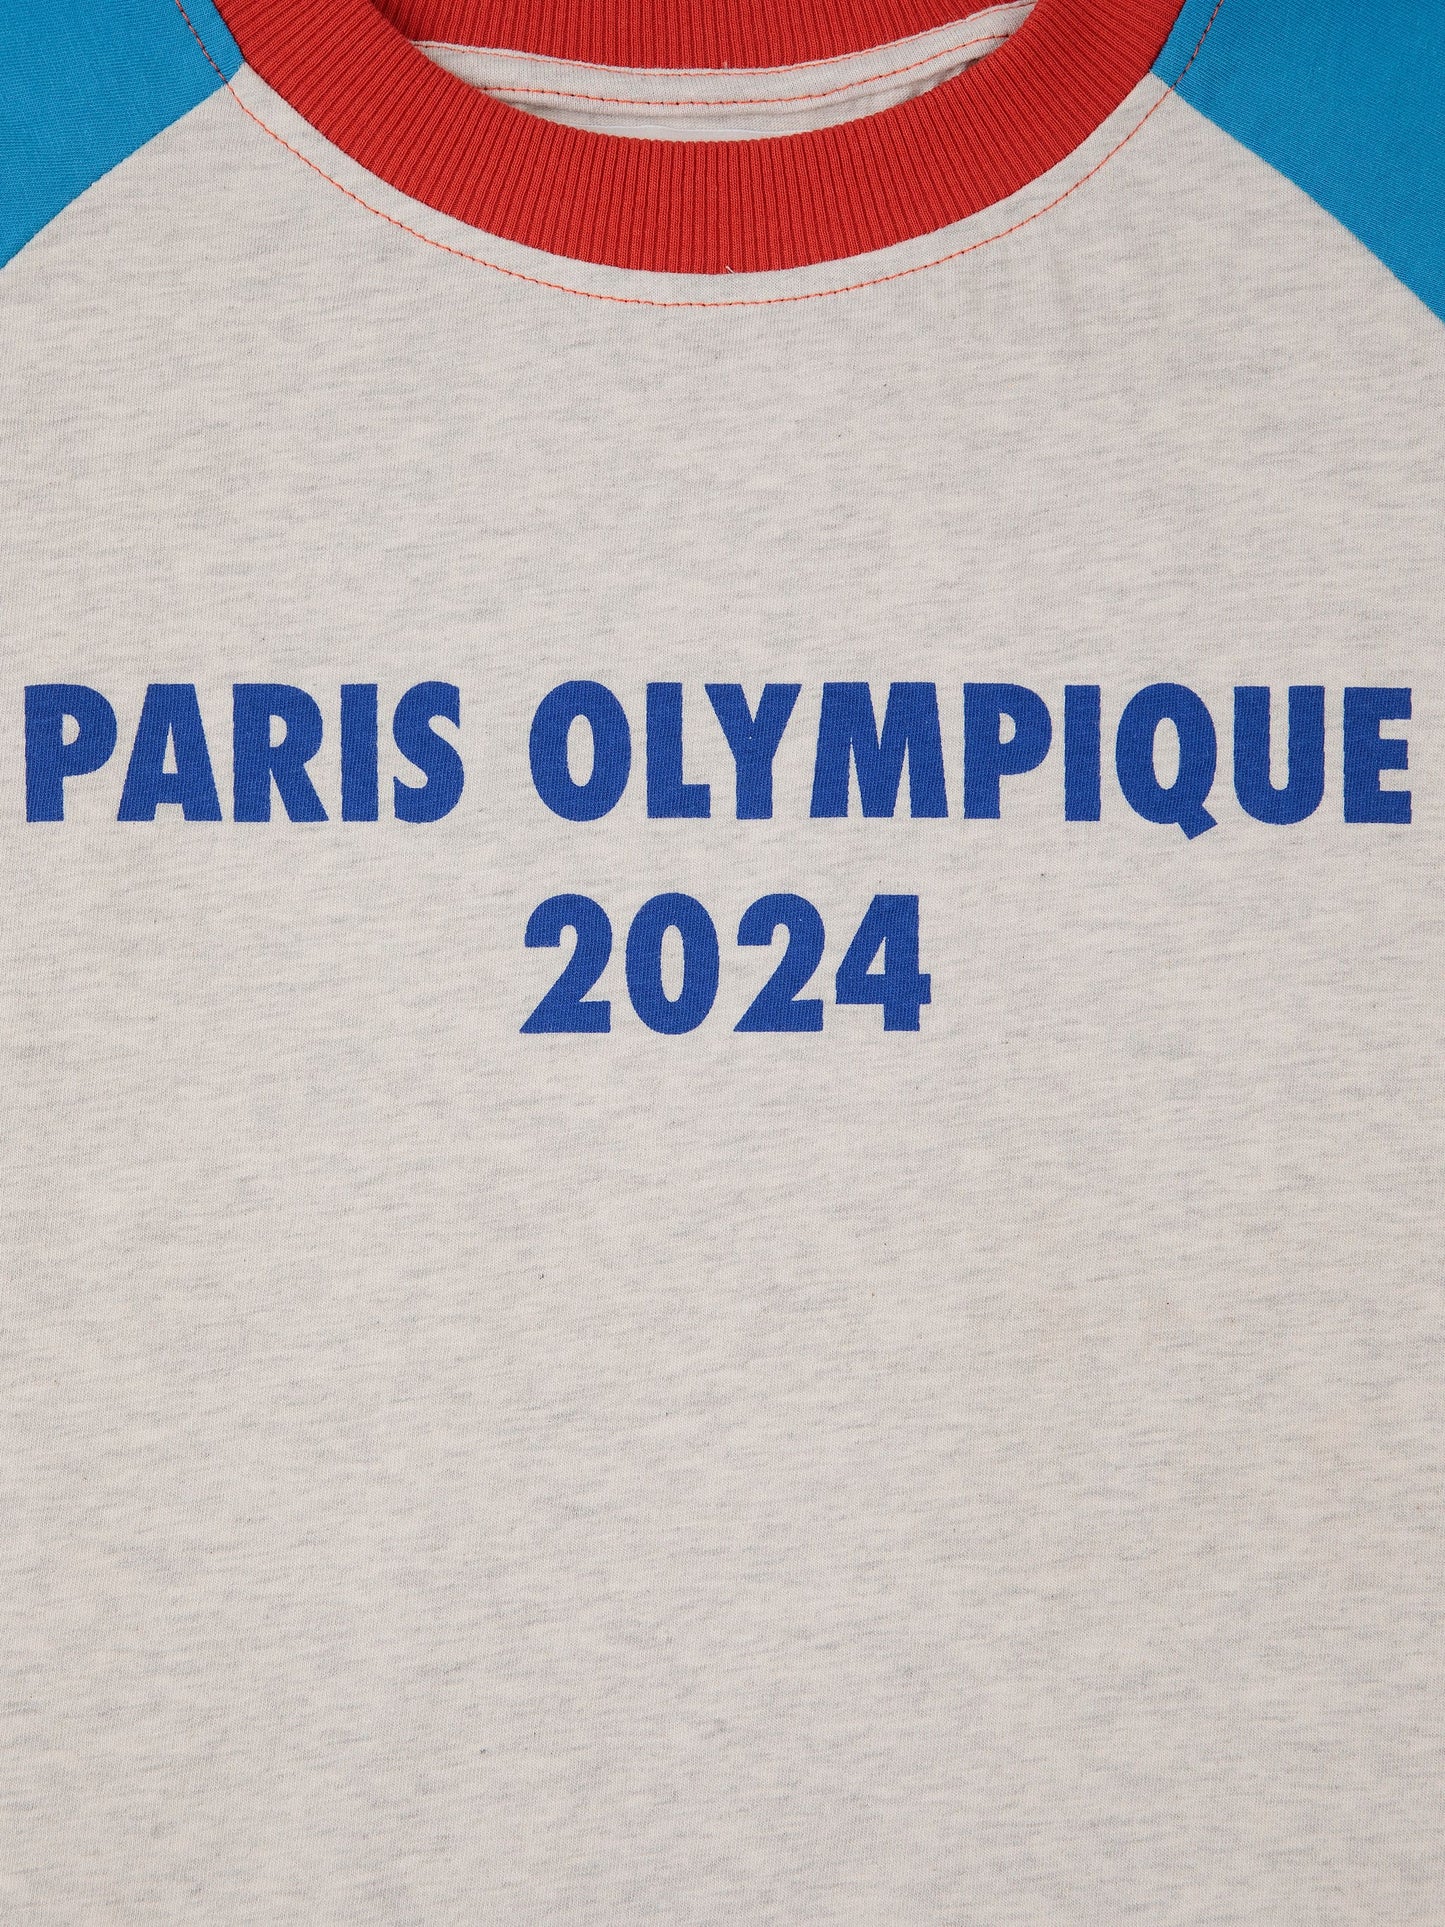 Paris olympique T-shirt